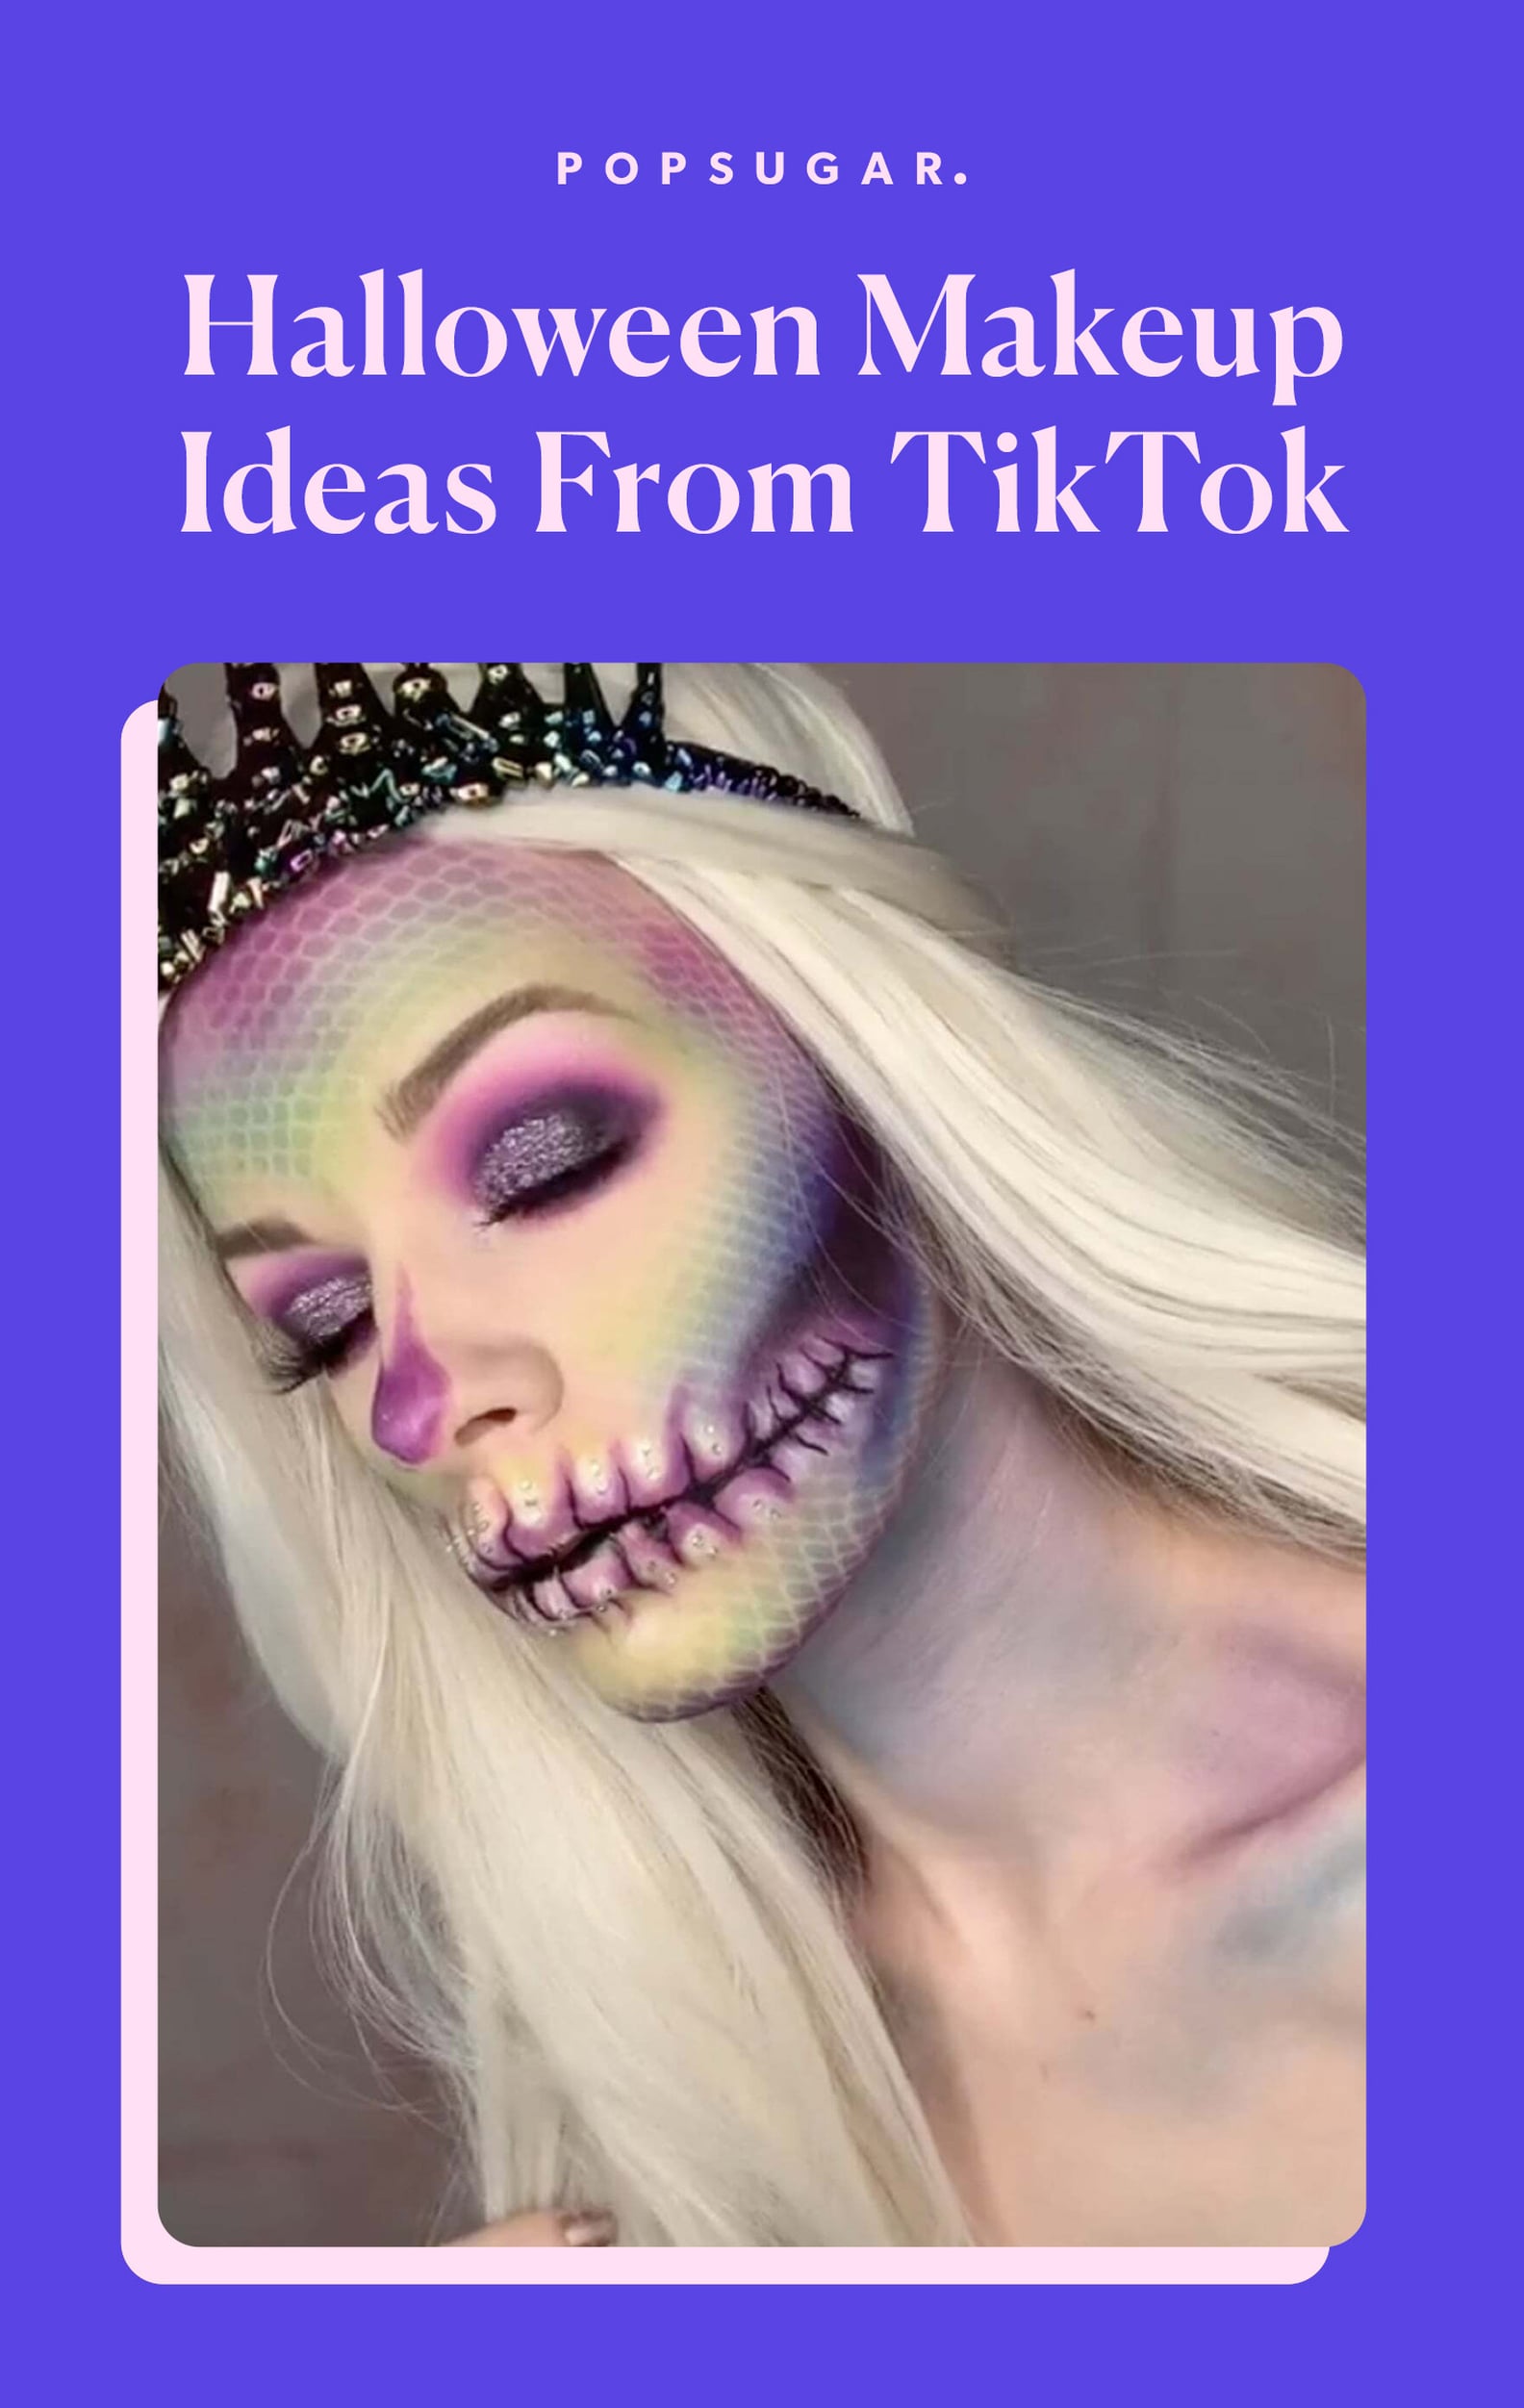 34 Halloween Makeup Ideas From TikTok | POPSUGAR Beauty